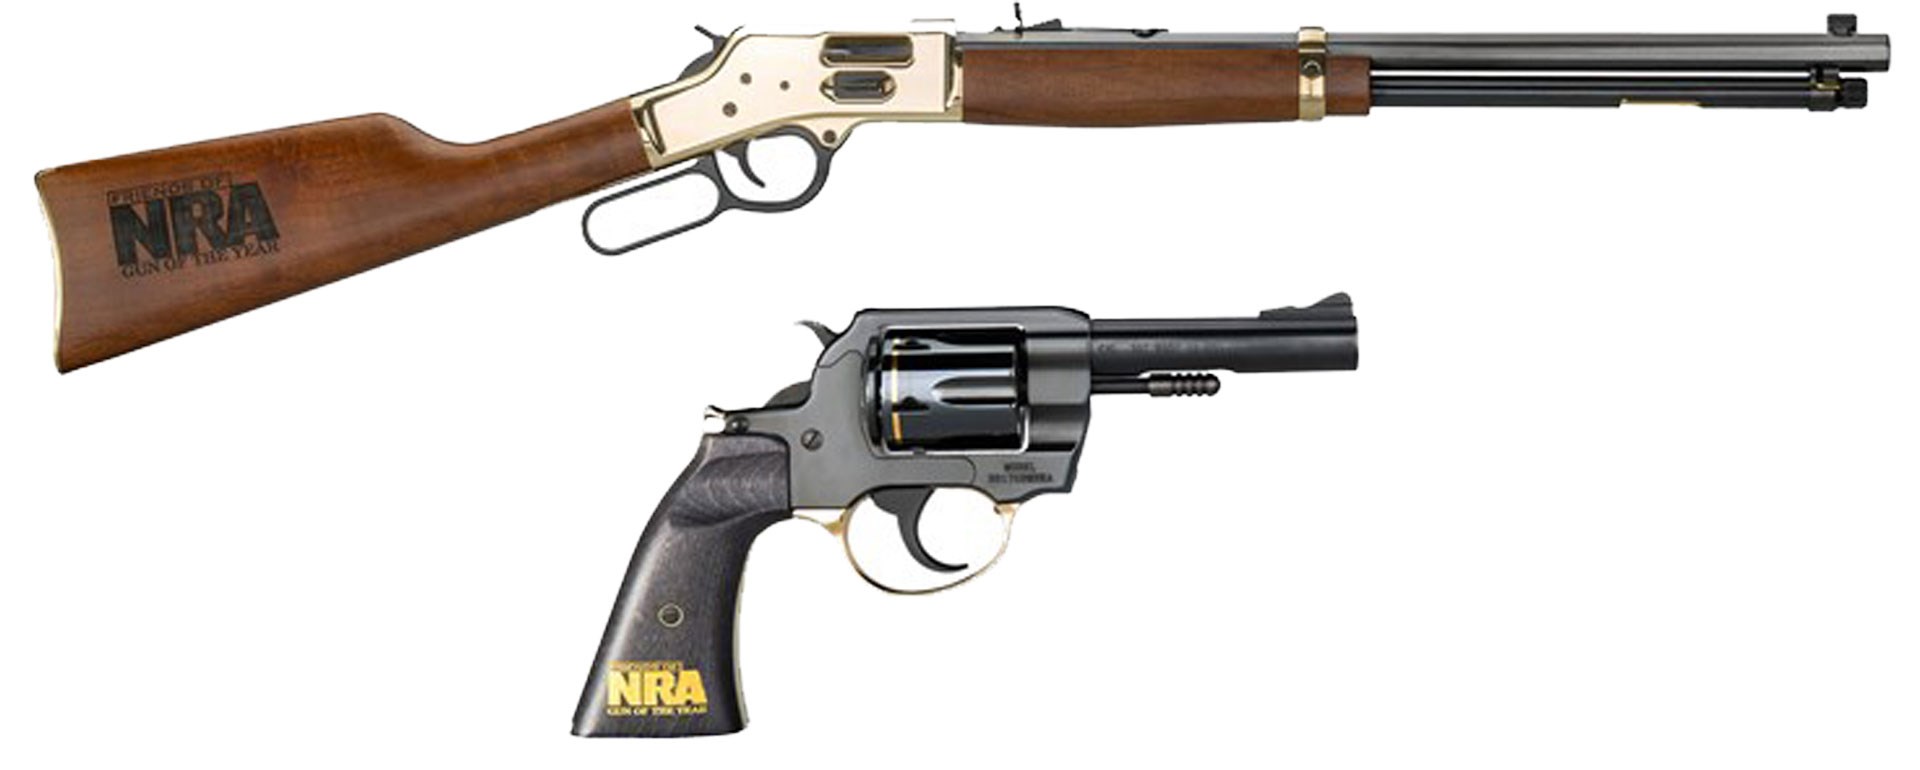 Big Boy Revolver and Rifle